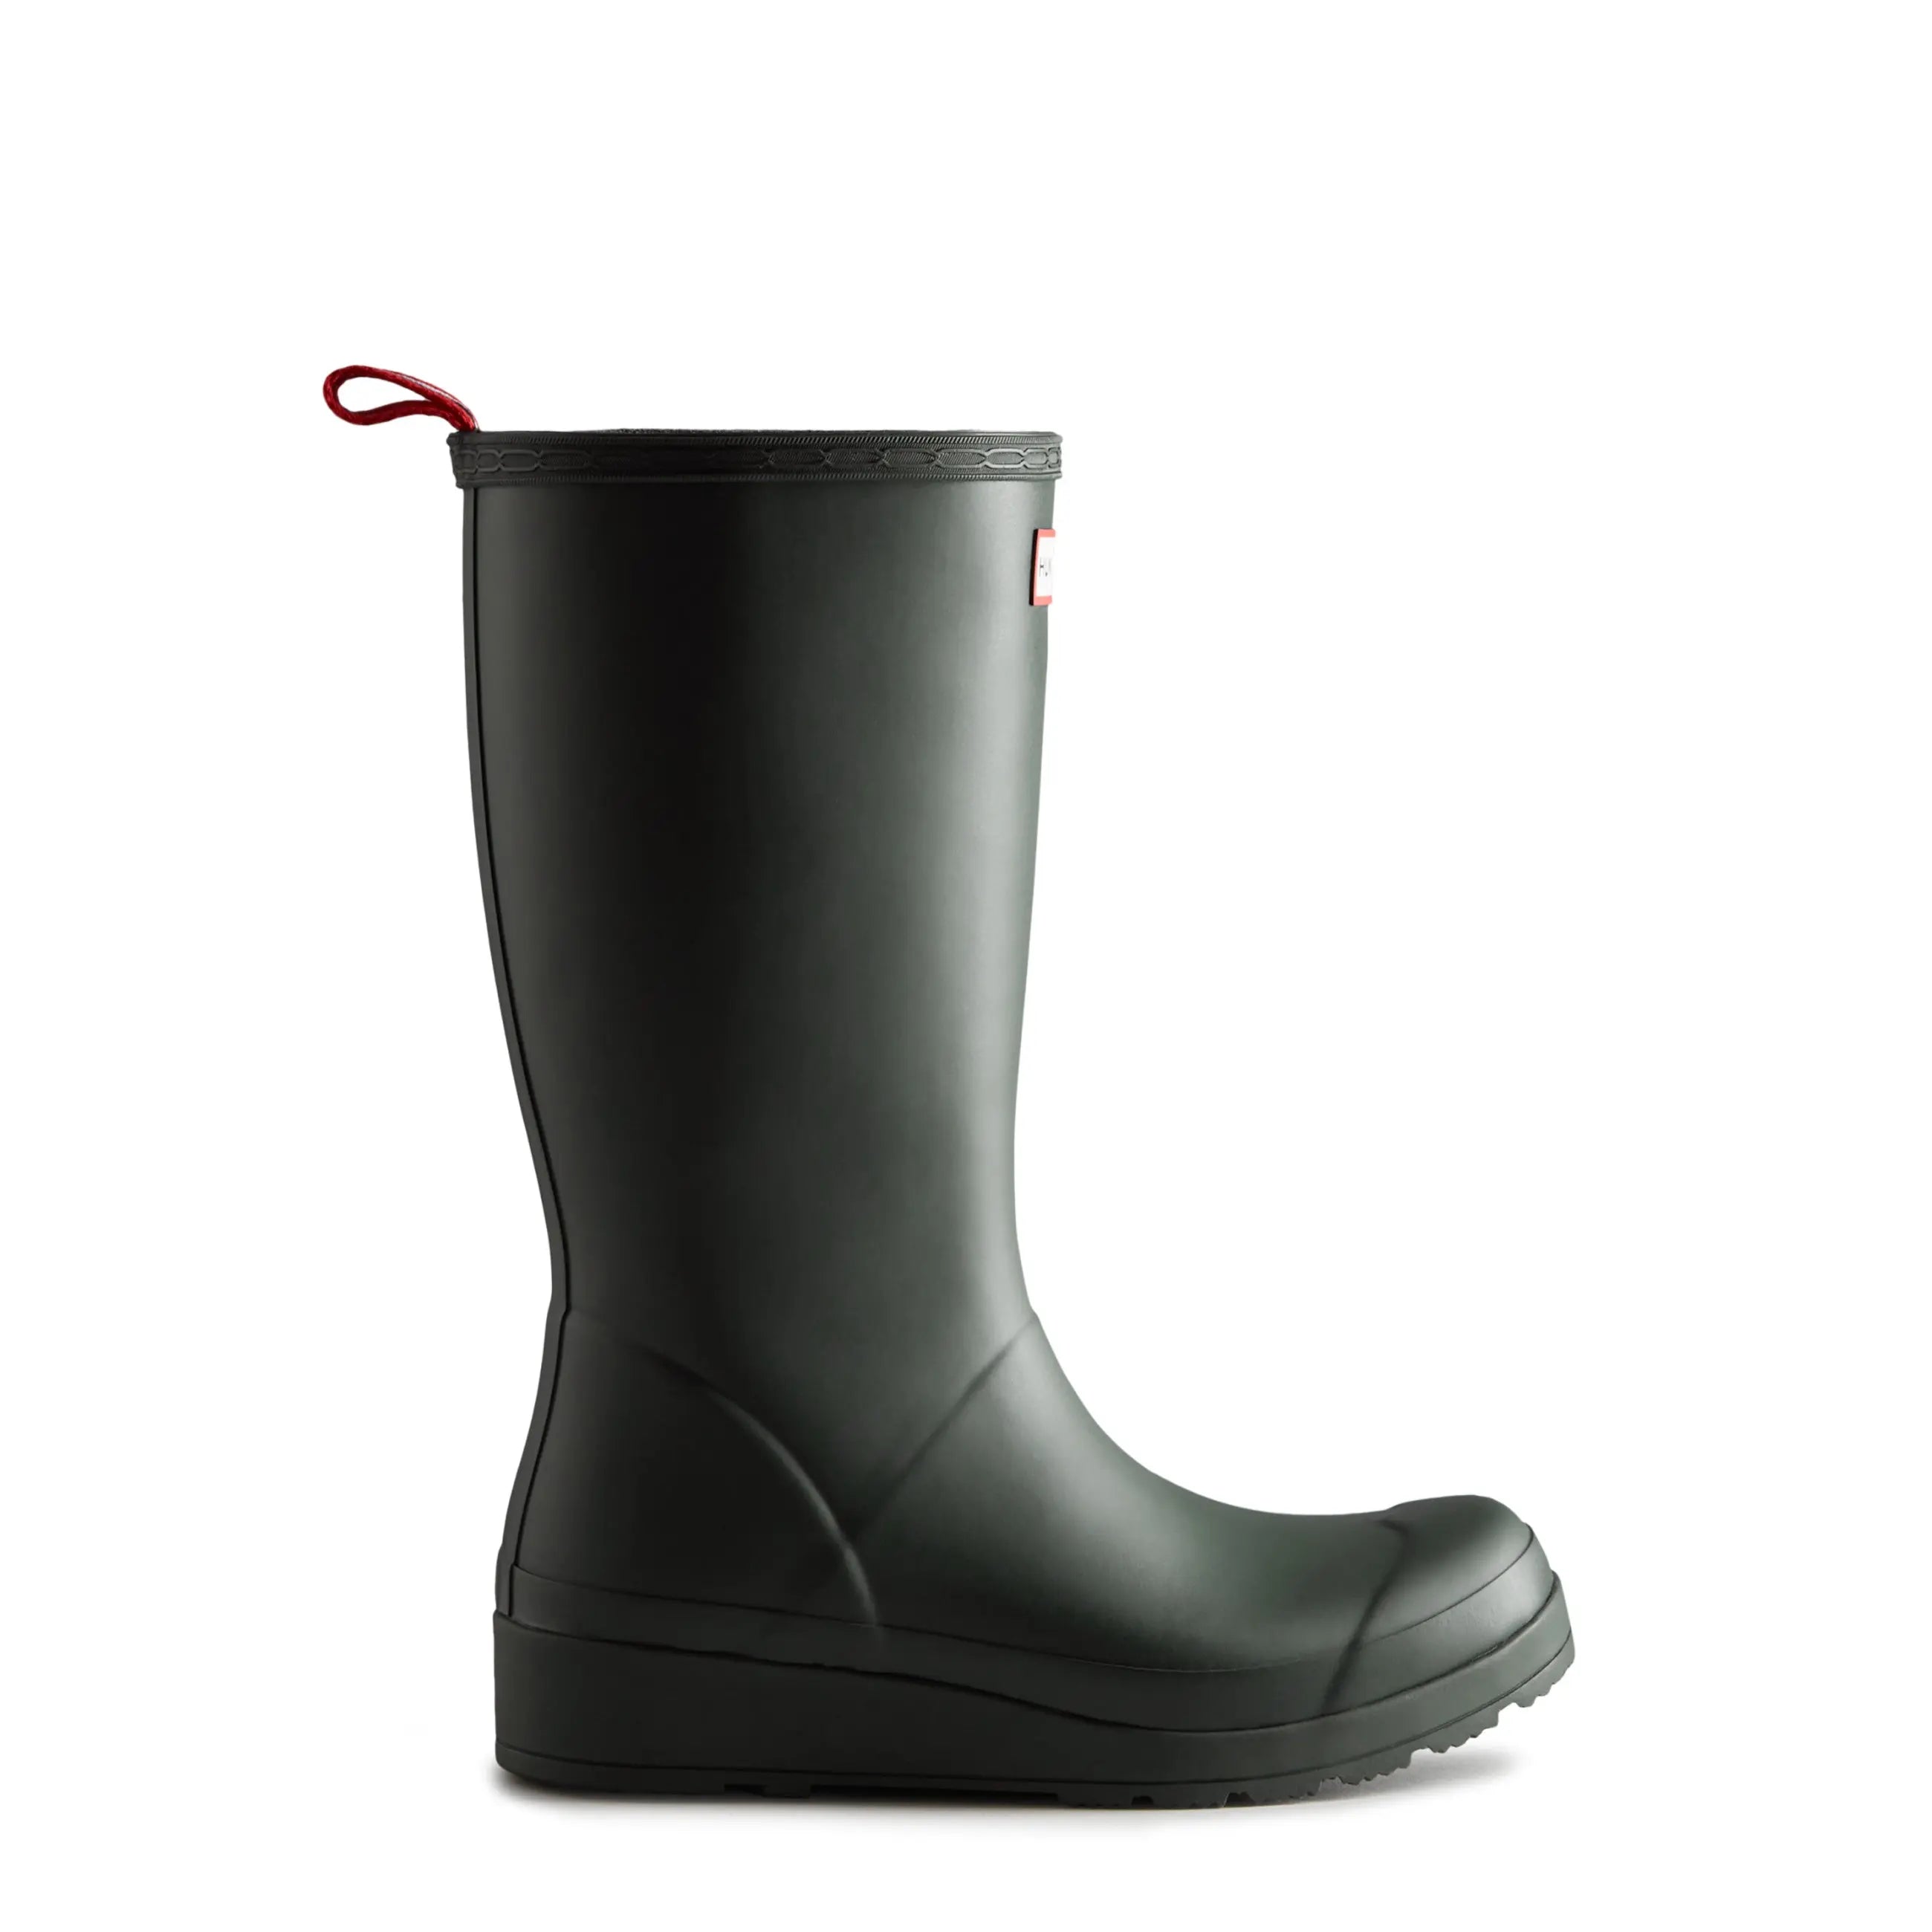 Women's PLAY™ Tall Rain Boots - Hunter Boots Women's PLAY™ Tall Rain Boots Arctic Moss Hunter Boots Women's > Rain Boots > Play Boots